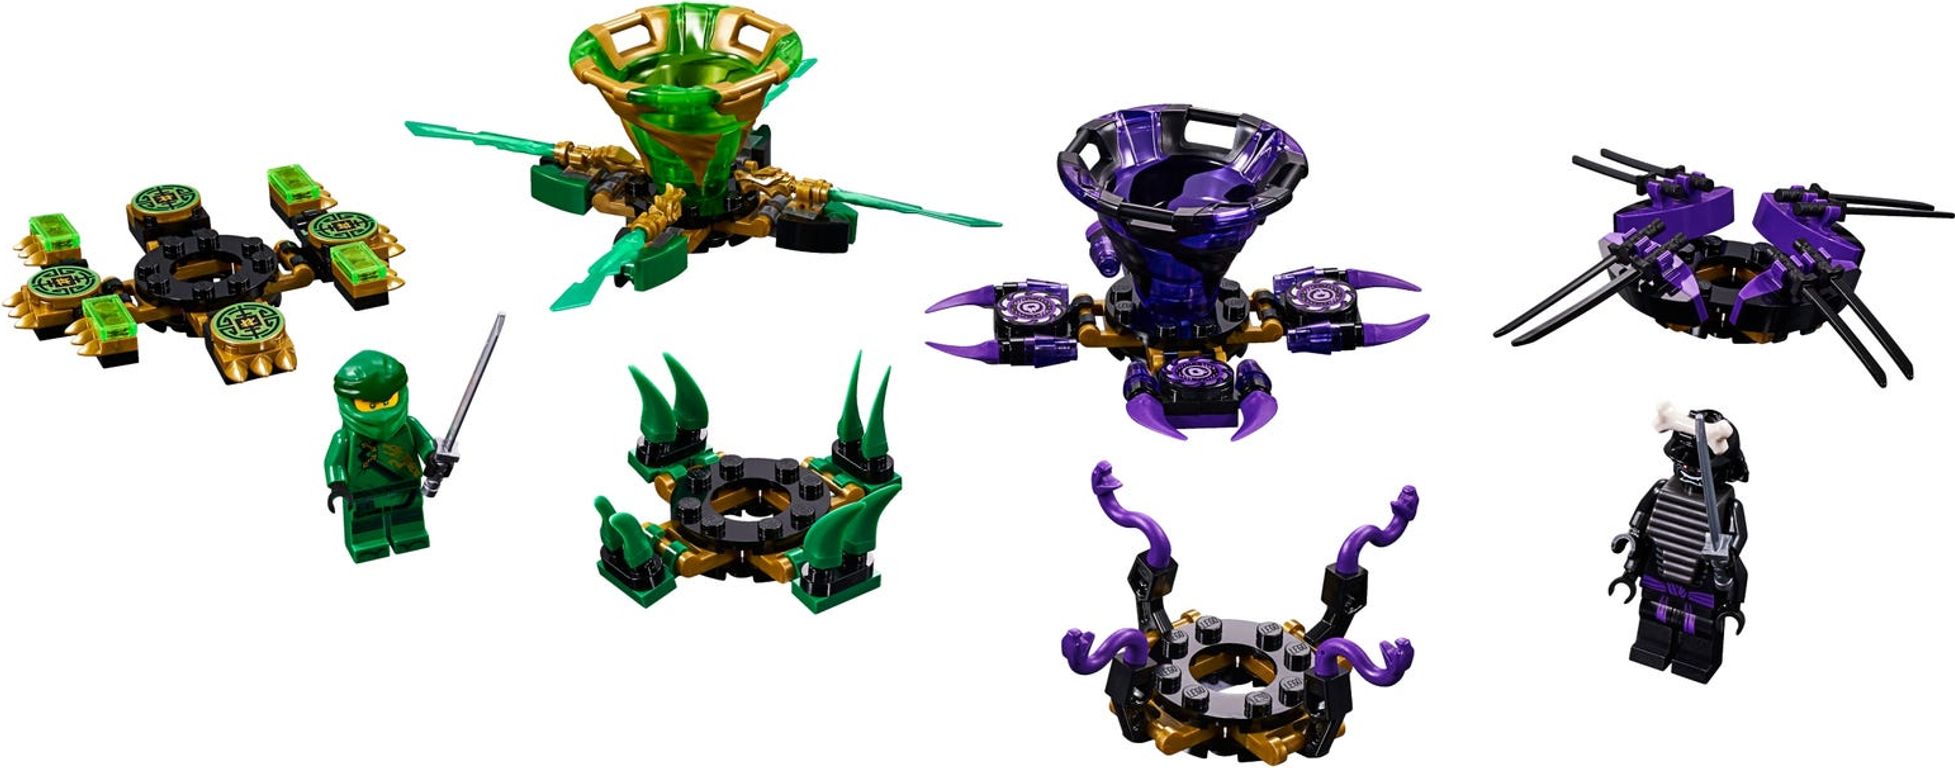 LEGO® Ninjago Spinjitzu Lloyd vs. Garmadon components